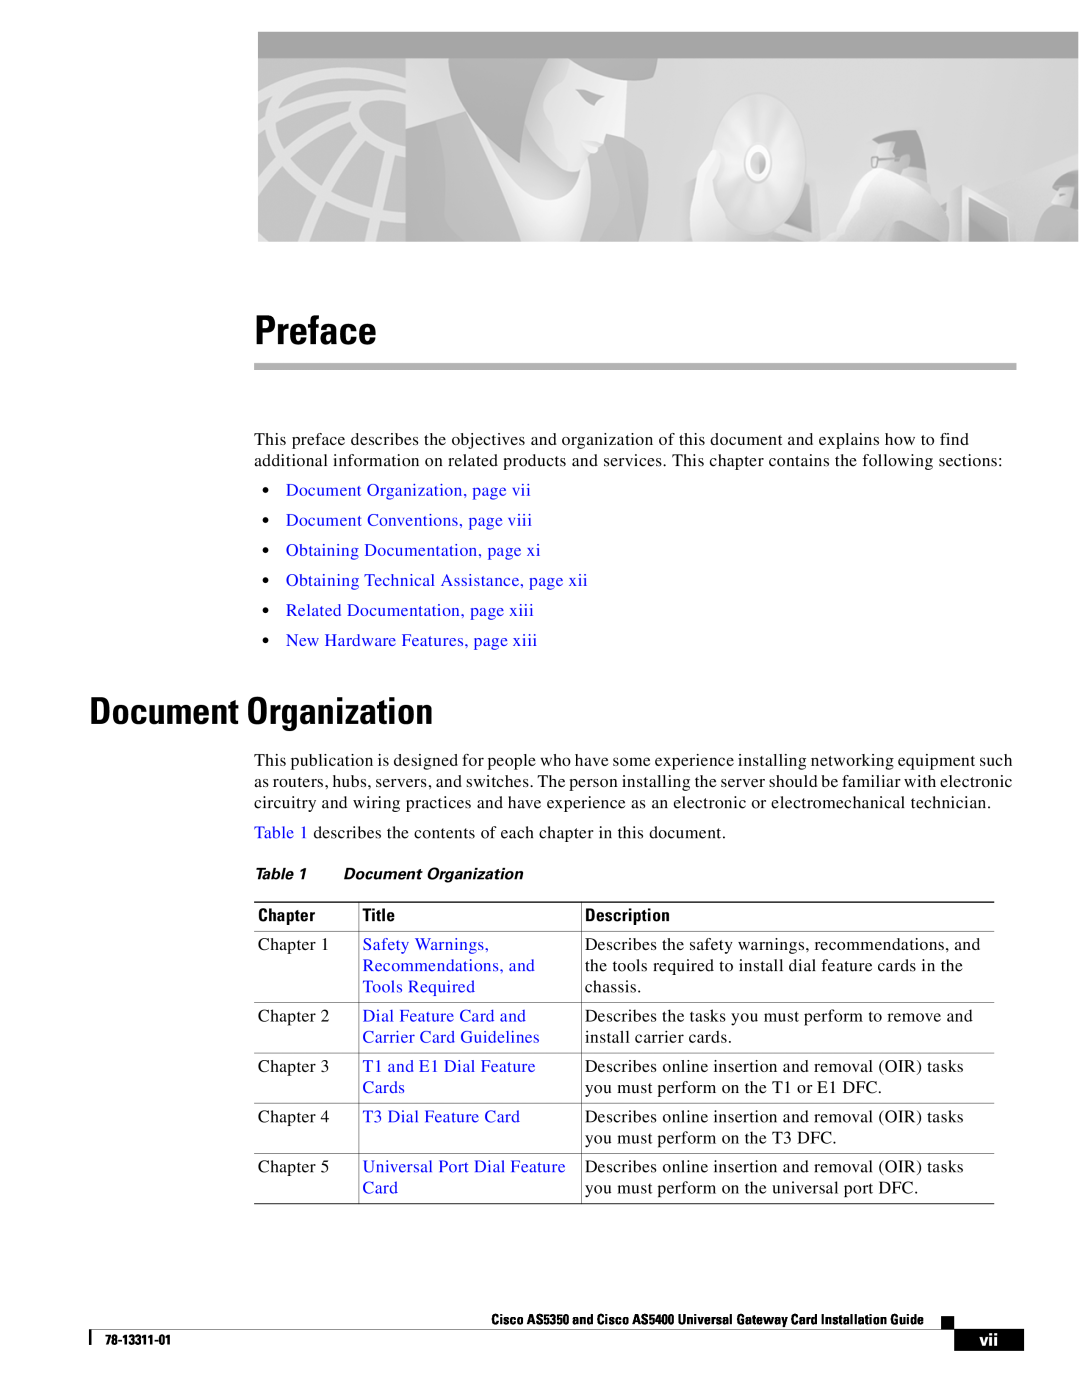 Cisco Systems AS5400 Preface, Document Organization, page Document Conventions, page, Chapter, Title, Description 